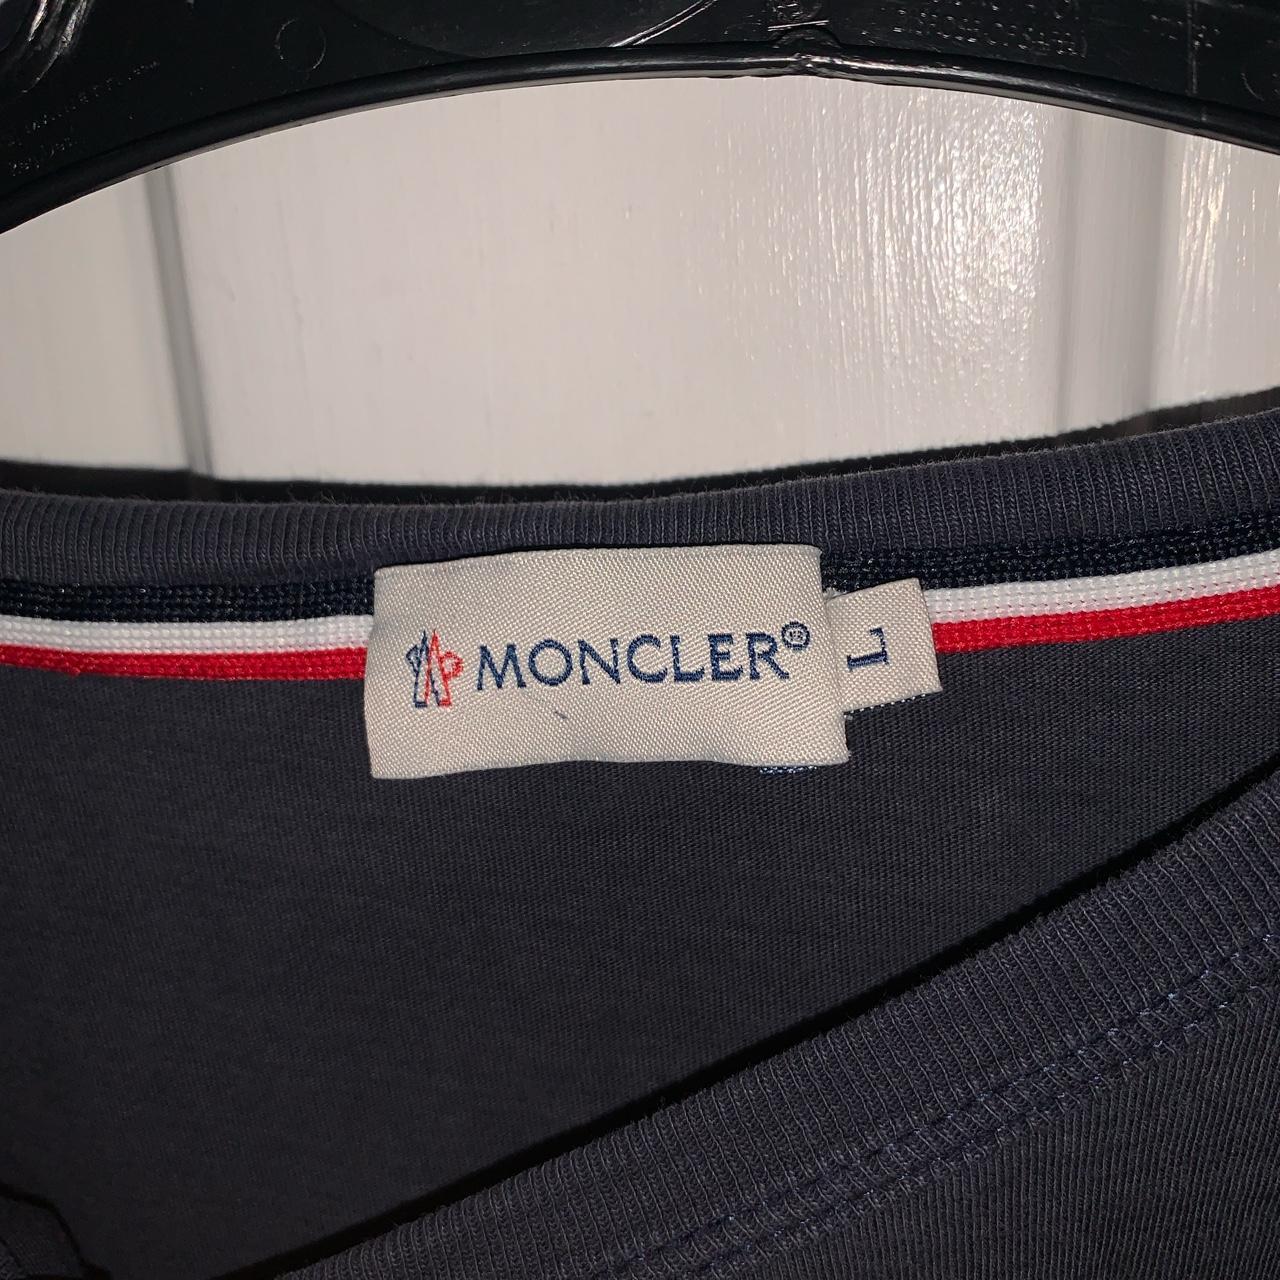 Smart moncler polo shirt for sale! Size: Would best... - Depop